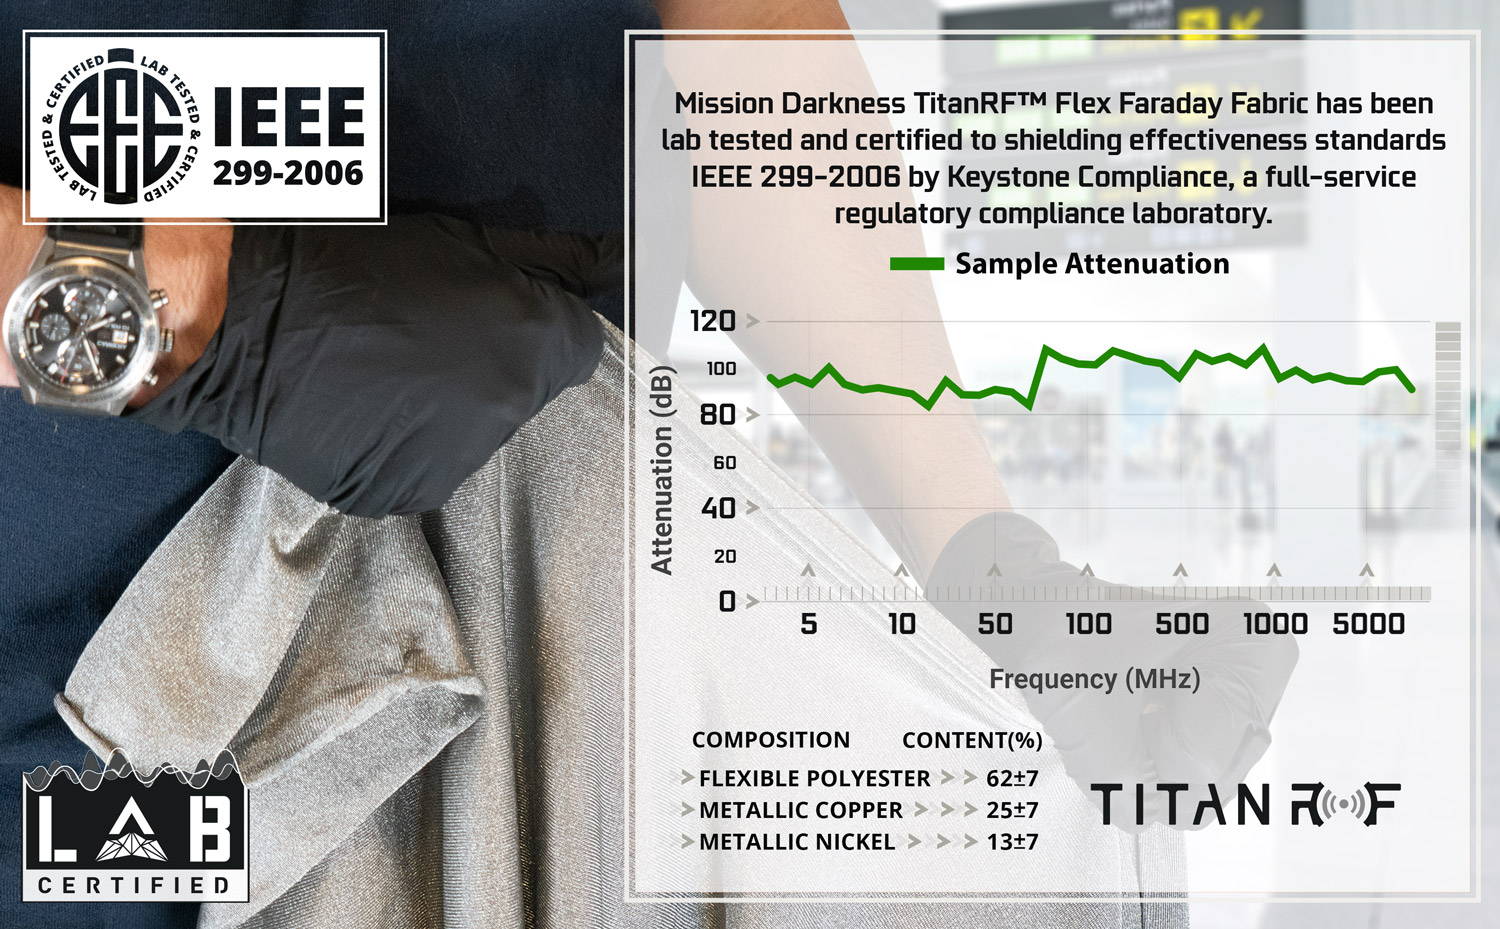 IEEE 299-2006 Keystone Compliance laboratory testing to confirm shielding effectiveness of Mission Darkness TitanRF™ Flex Faraday Fabric